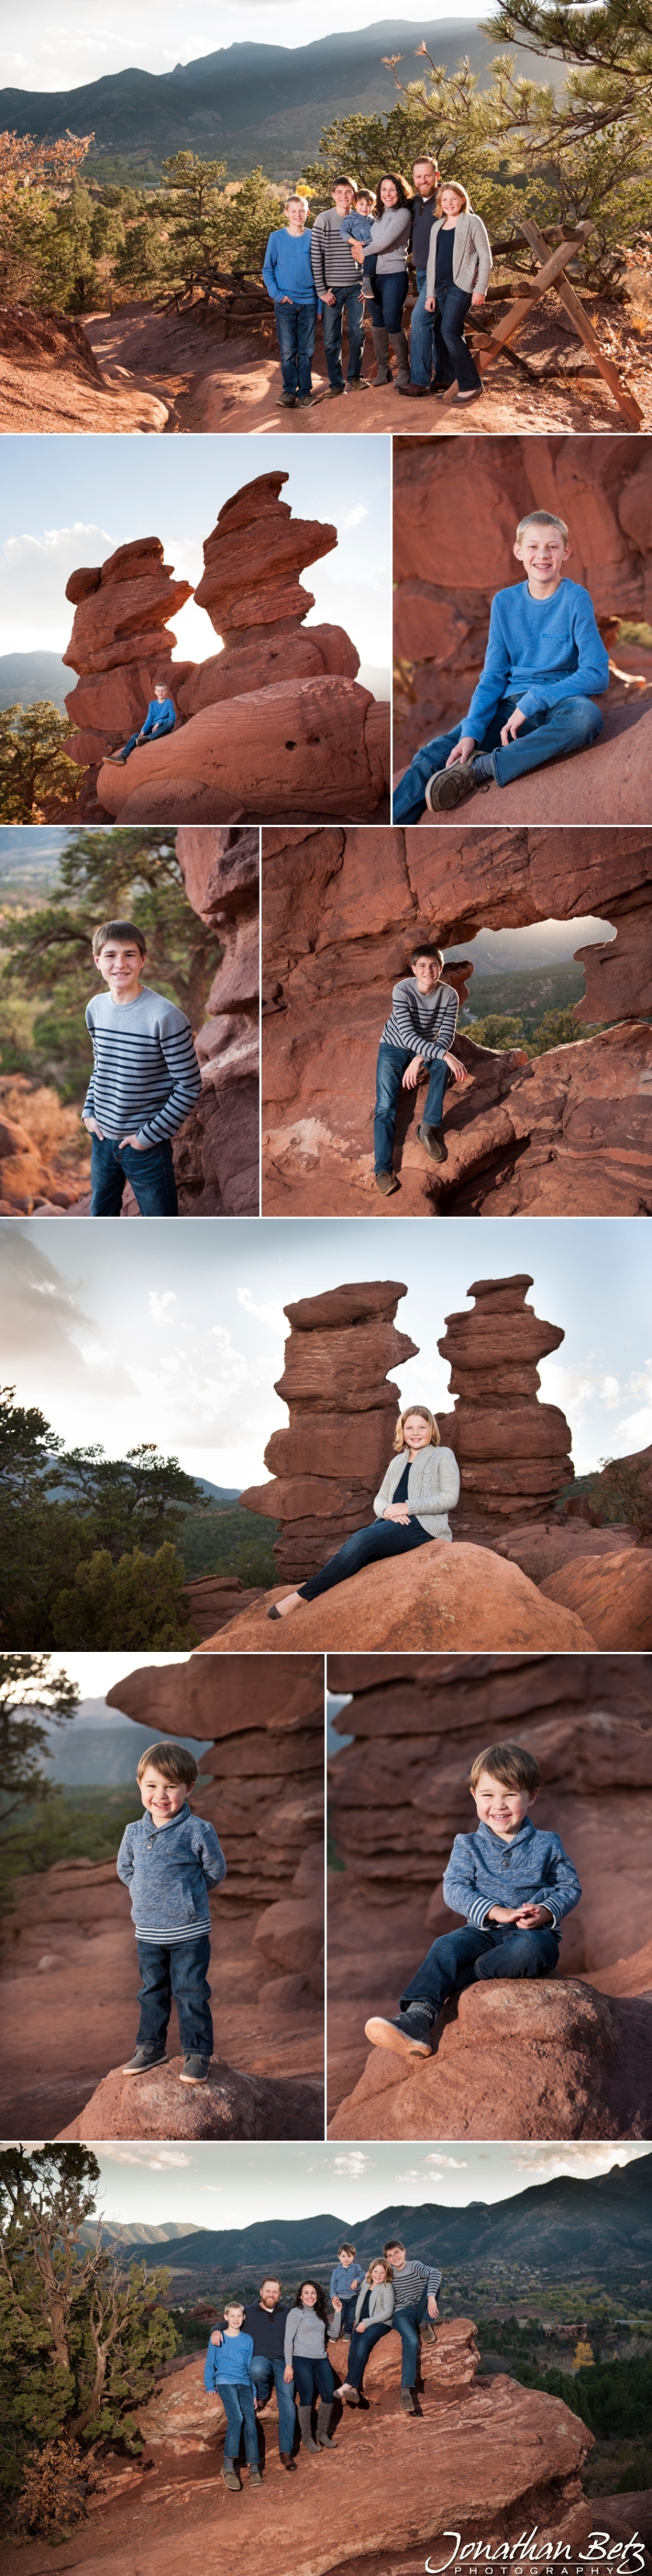 Colorado Springs Family Portraits Photographer Garden of the Gods Jonathan Betz Photography